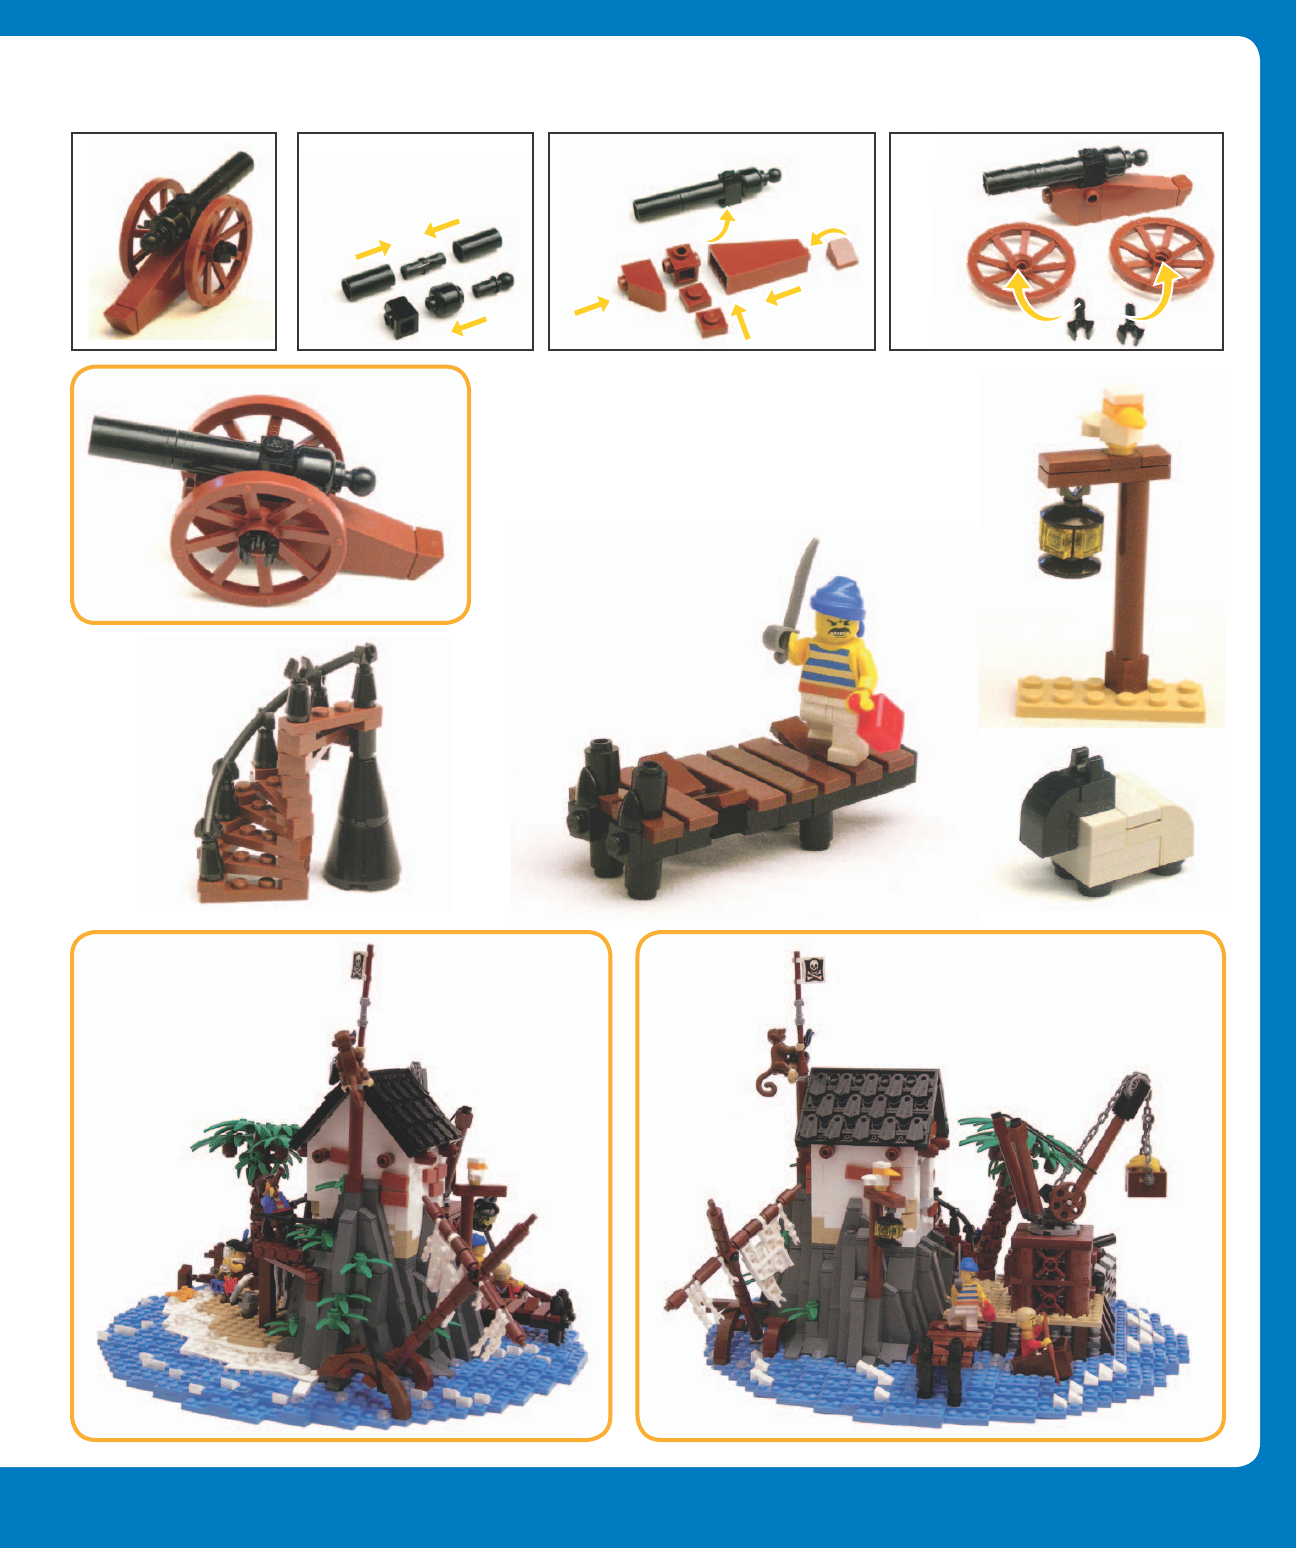 The LEGO Adventure Book, Vol. 2